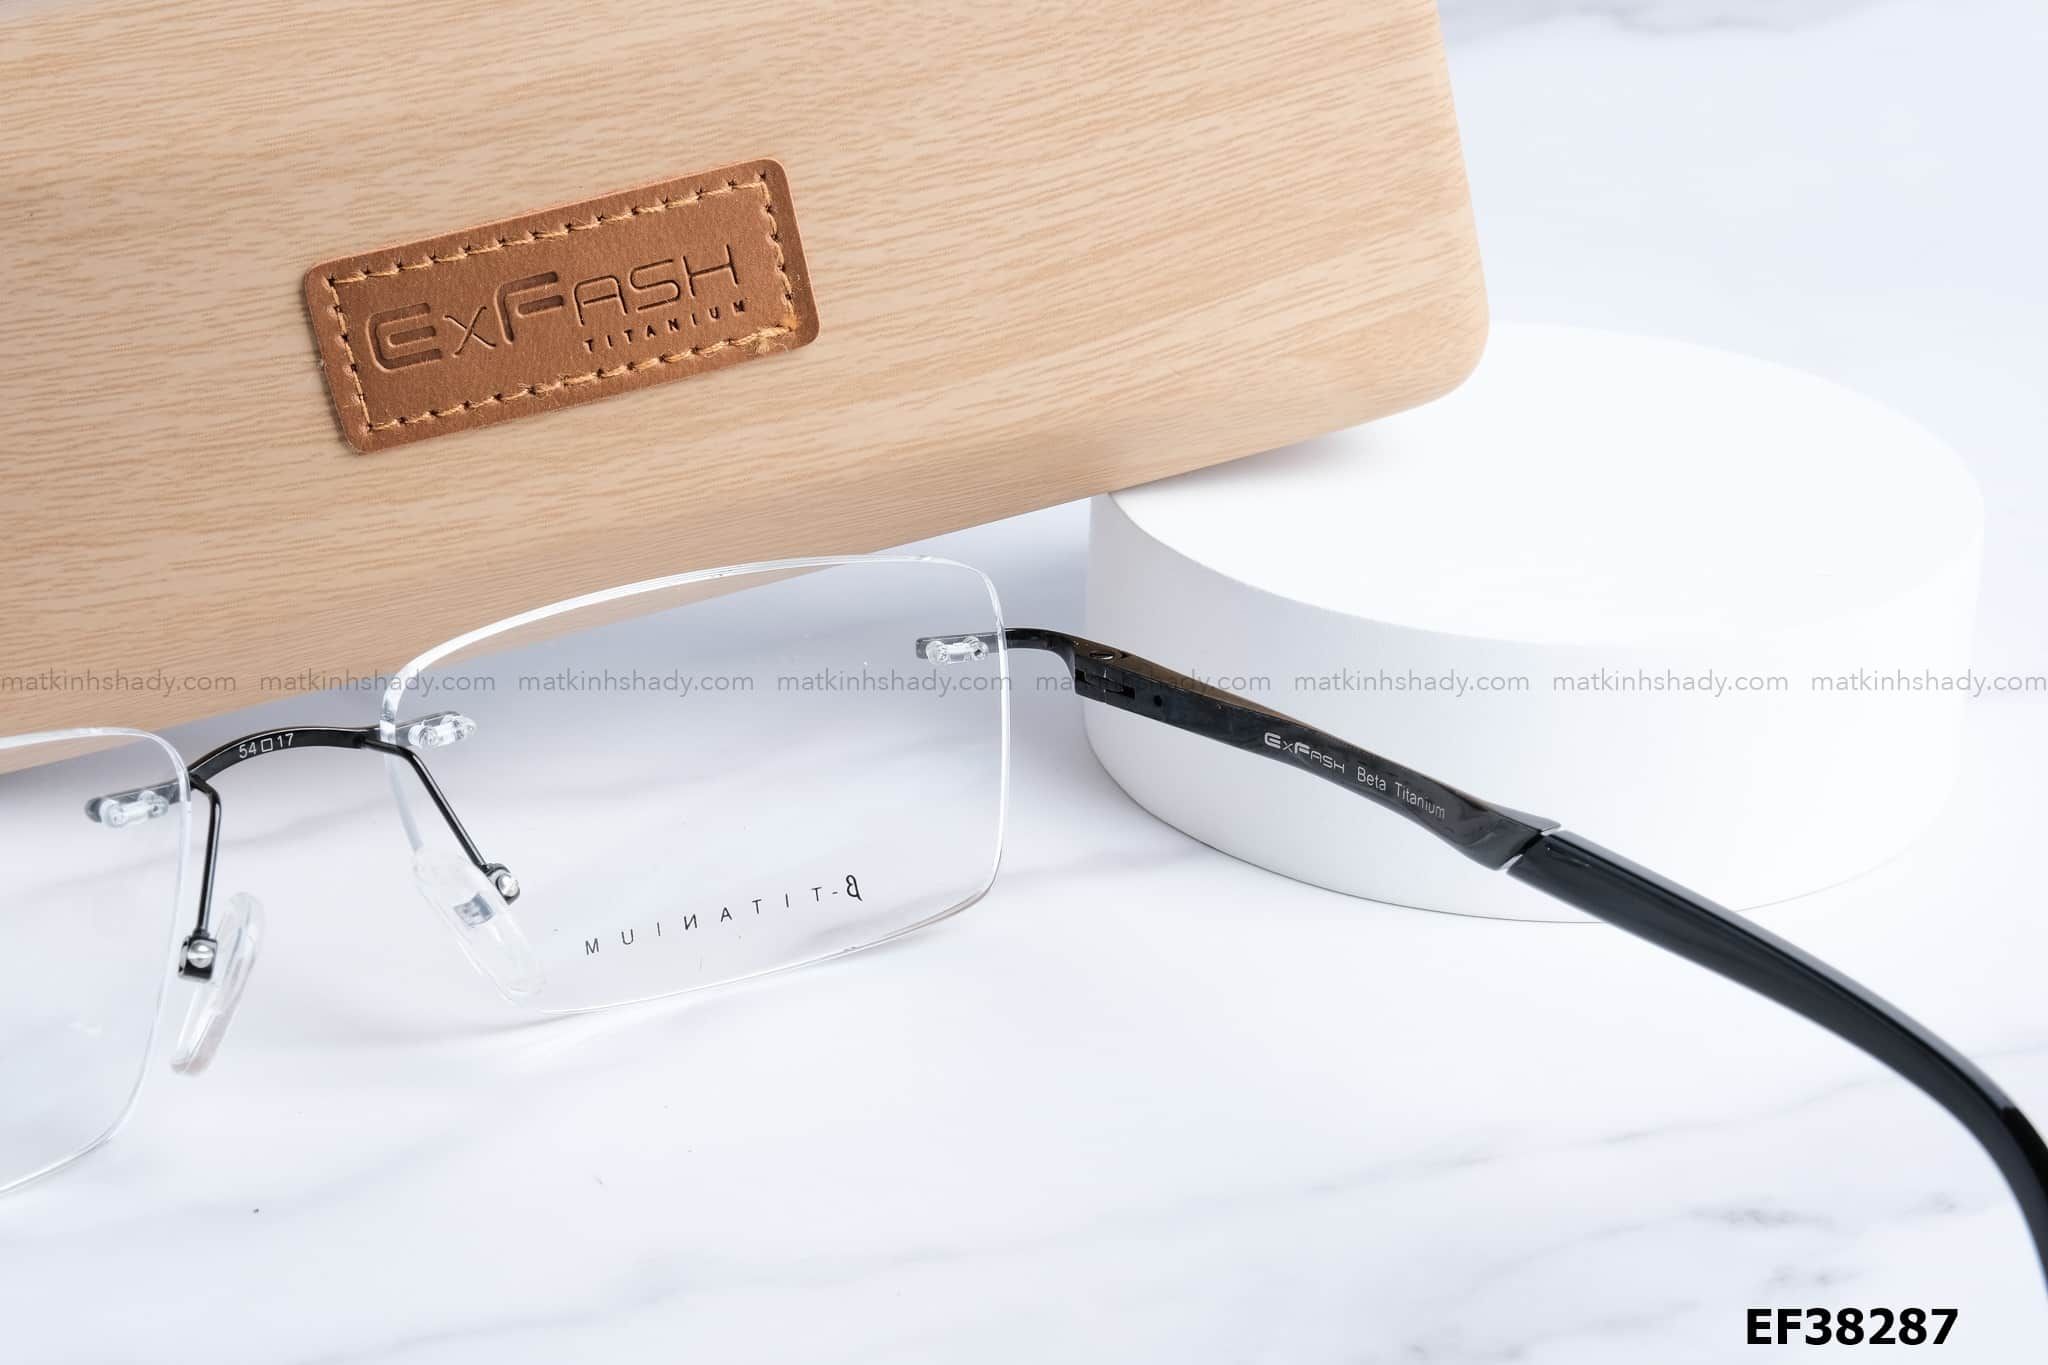  Exfash Eyewear - Glasses - EF38287 